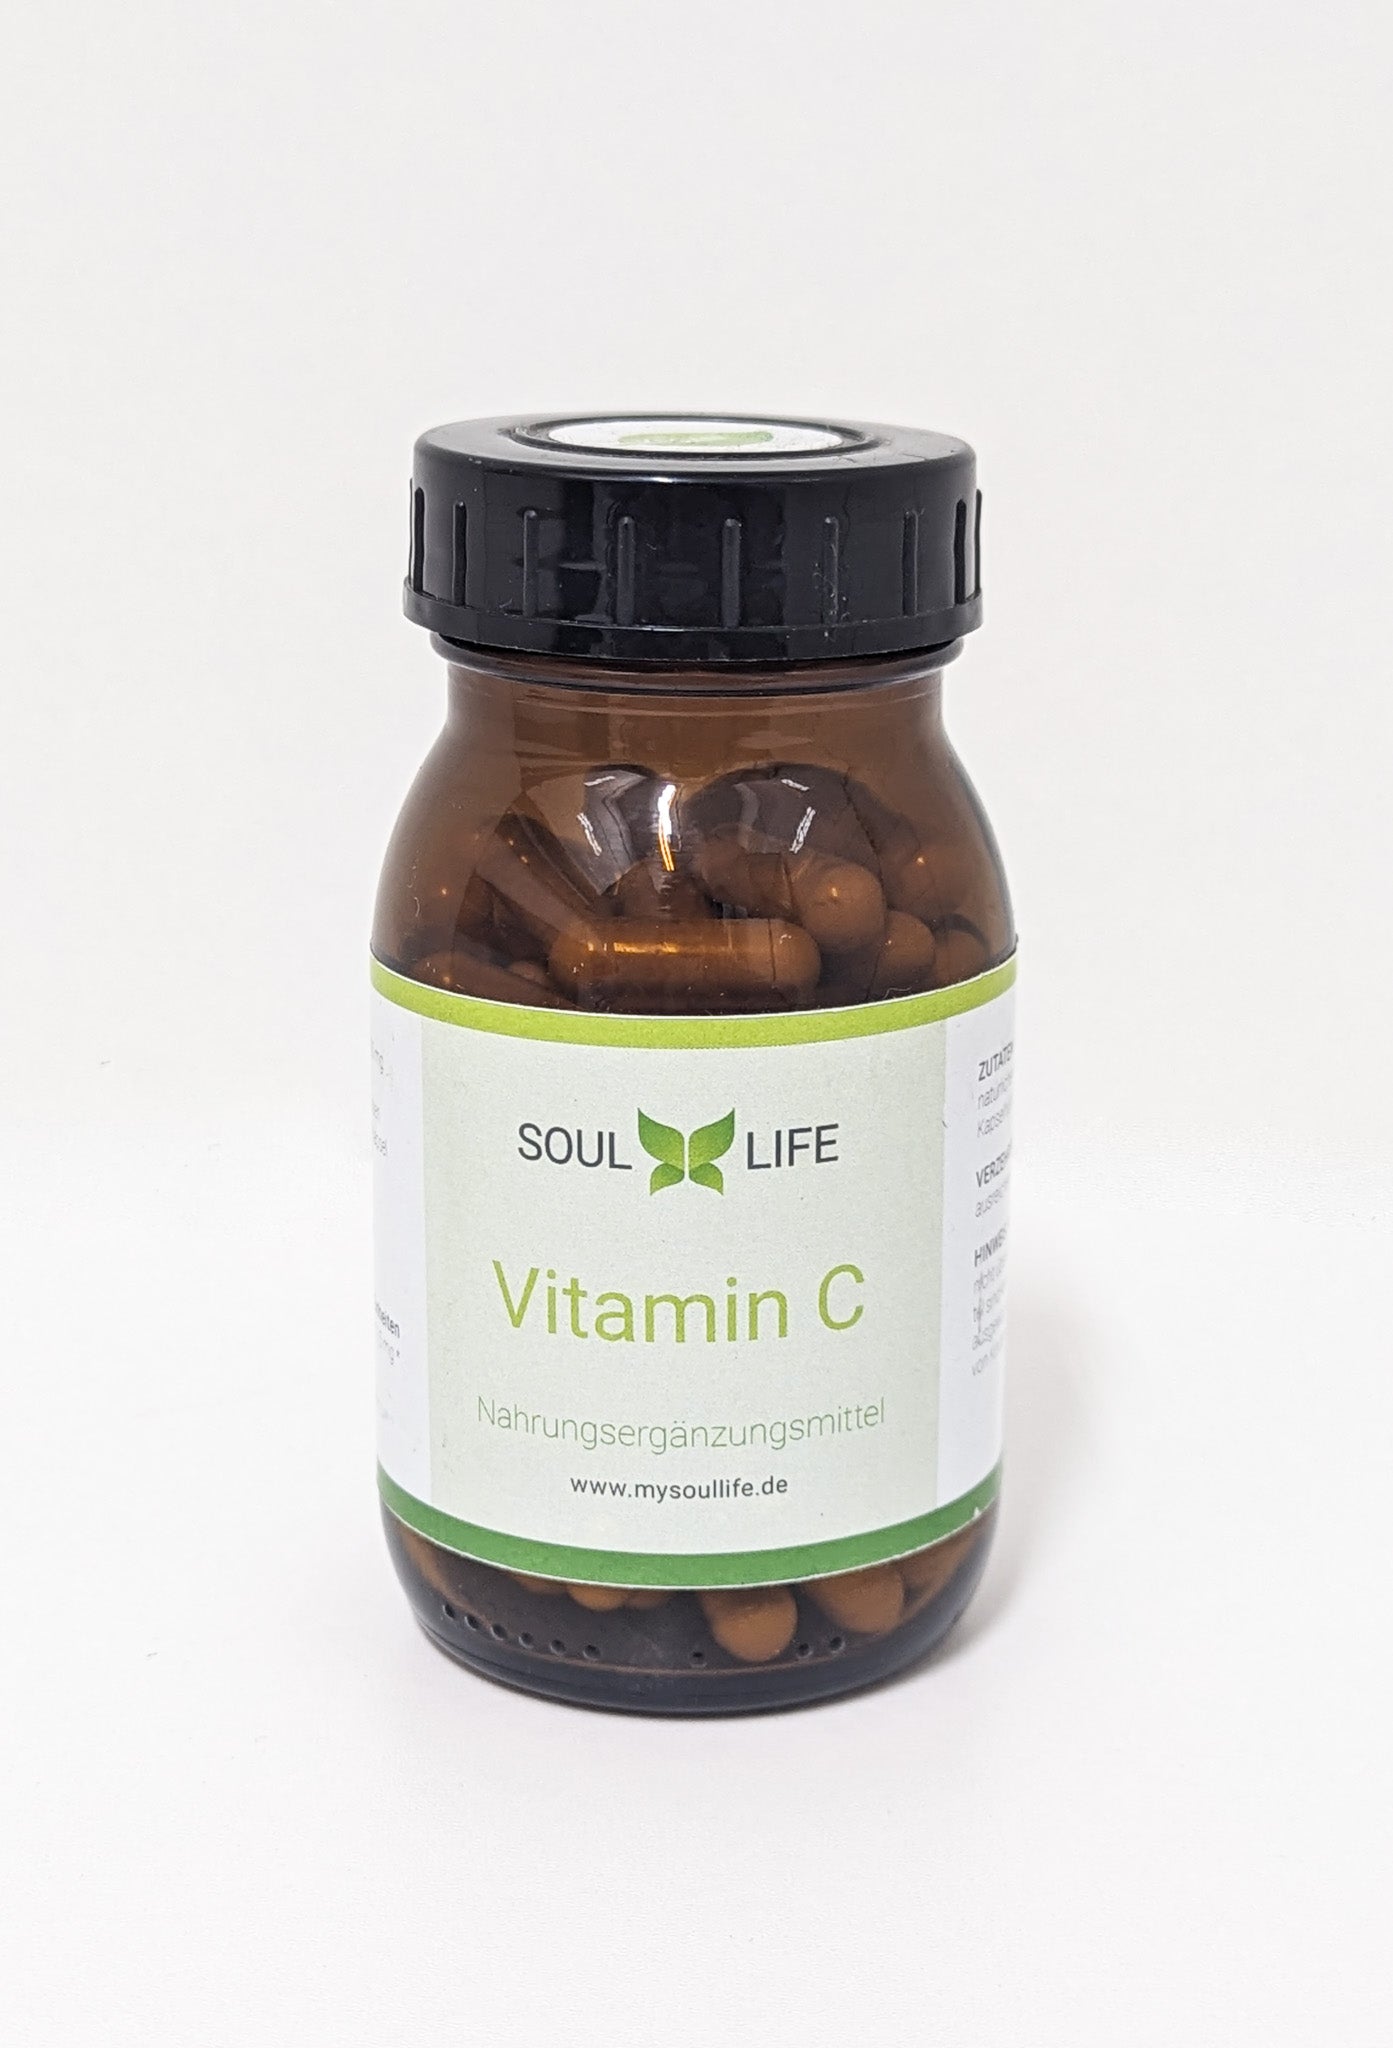 SoulLife Vitamin C Nahrungsergänzungsmittel